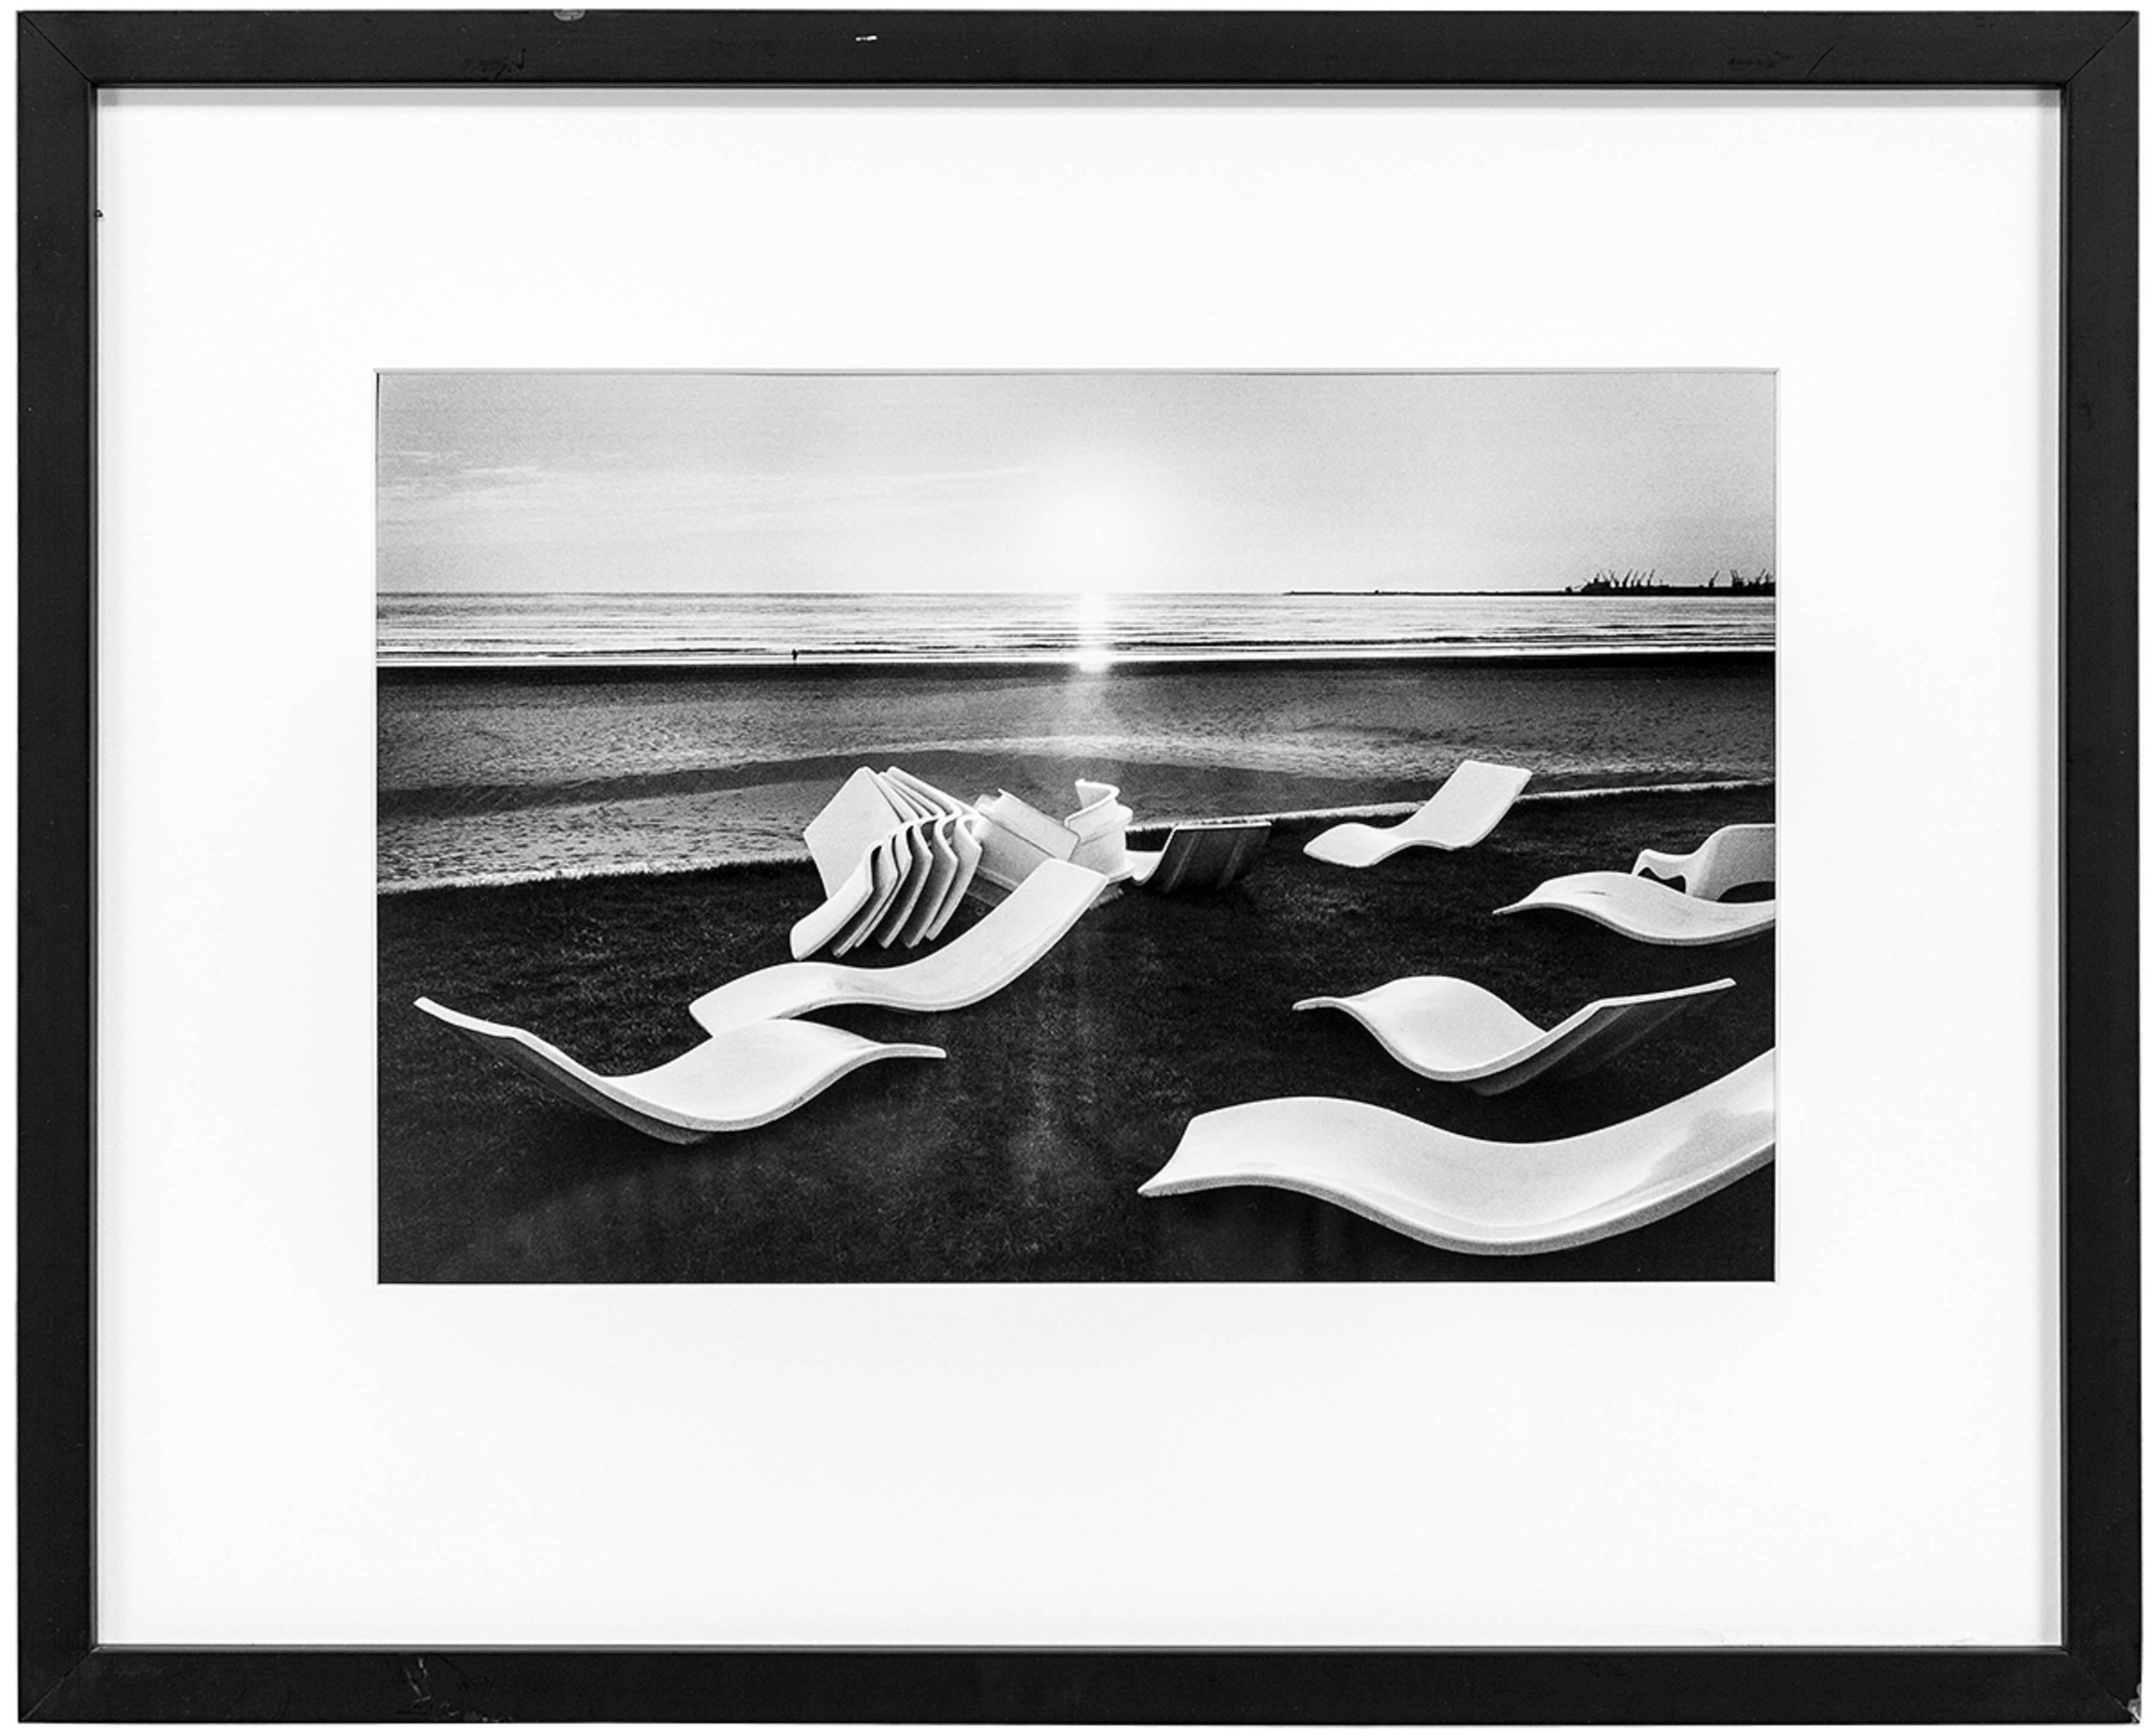 Martine Franck Black and White Photograph - Beach Run by Club Med, Agadir, Morocco Vintage Silver Gelatin Photograph Print